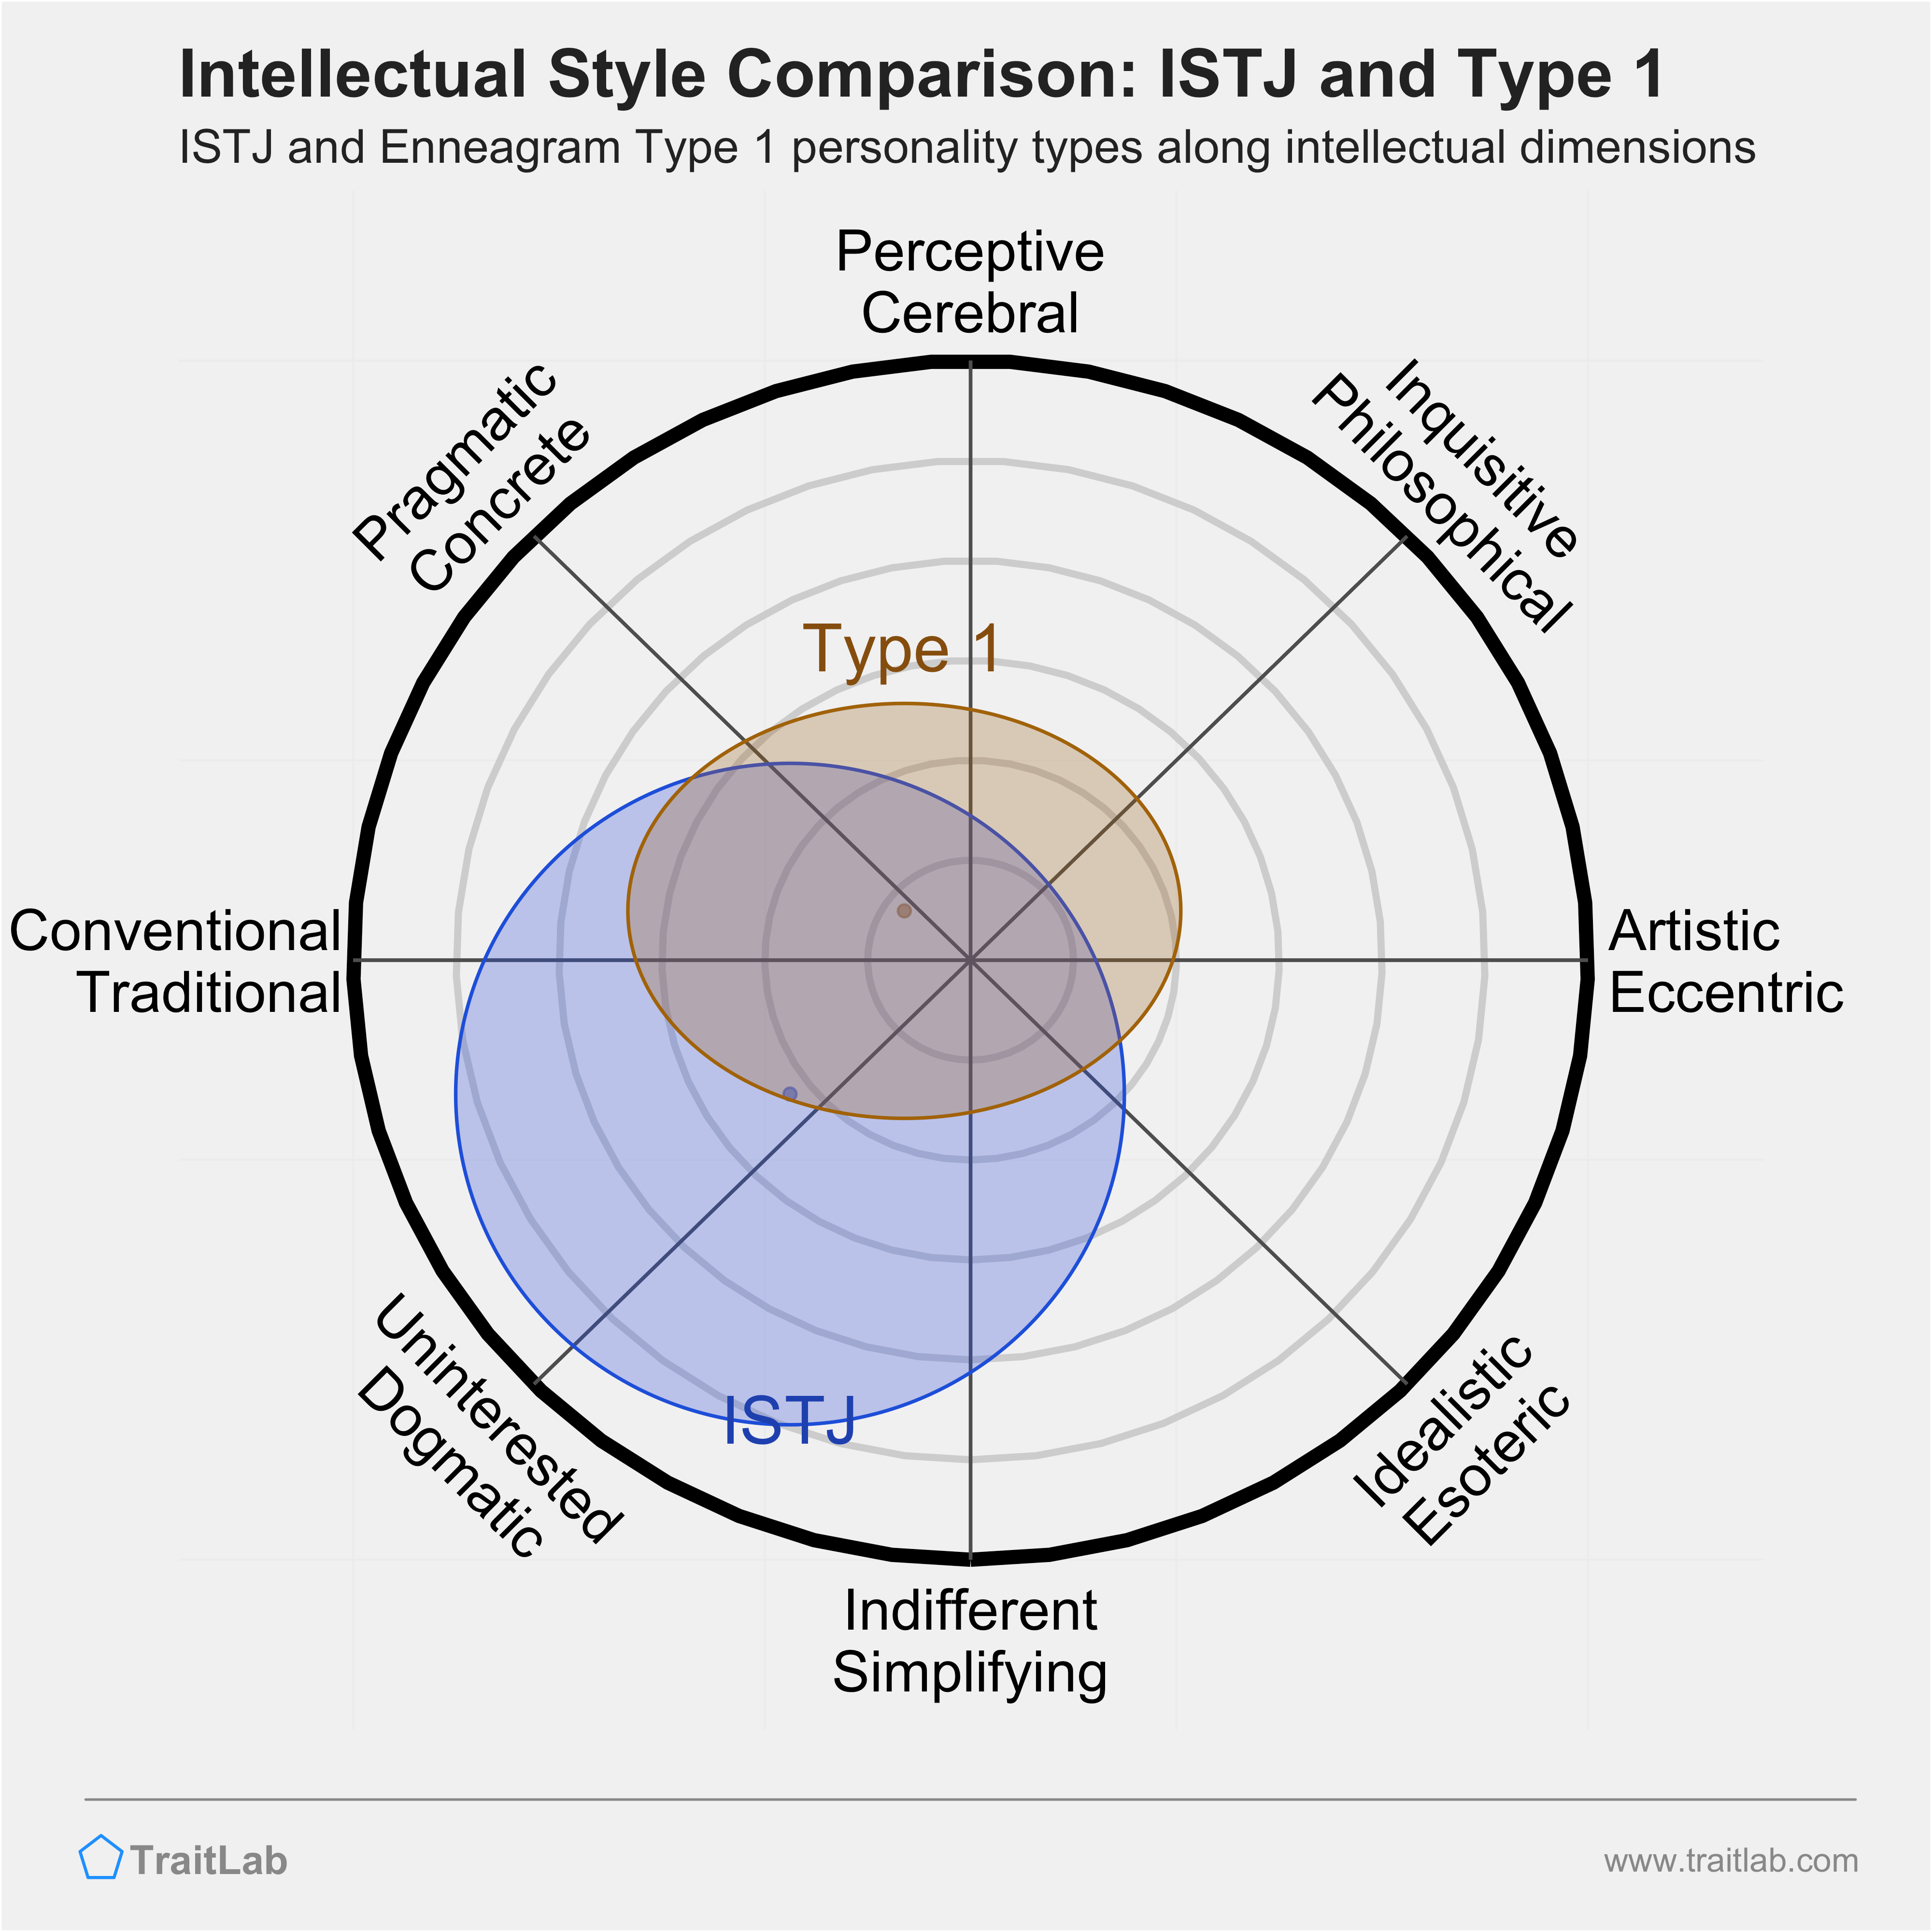 ISTJ and Type 1 comparison across intellectual dimensions